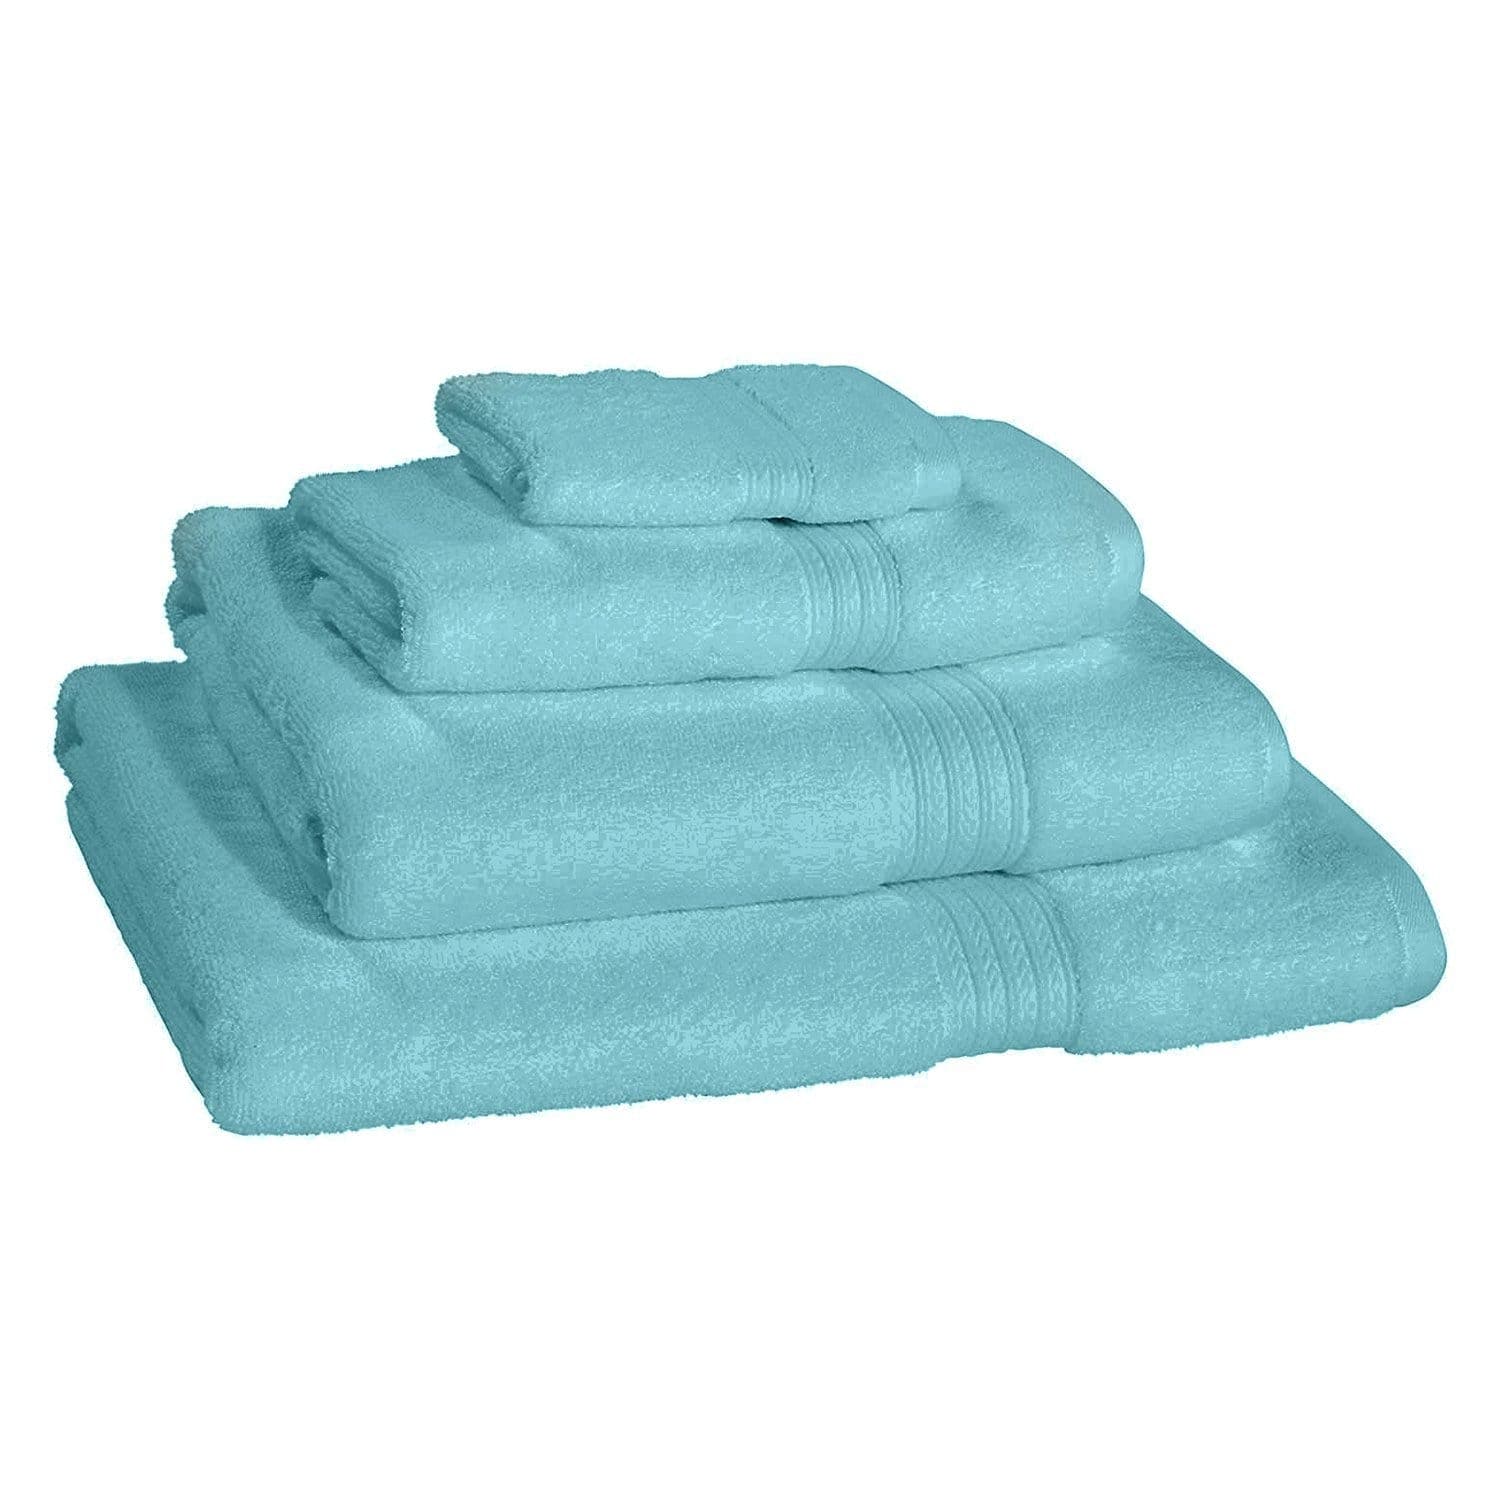 Kassatex Kassadesign Hand Towel - Caribbean Blue - KDK-110-CEB - Jashanmal Home